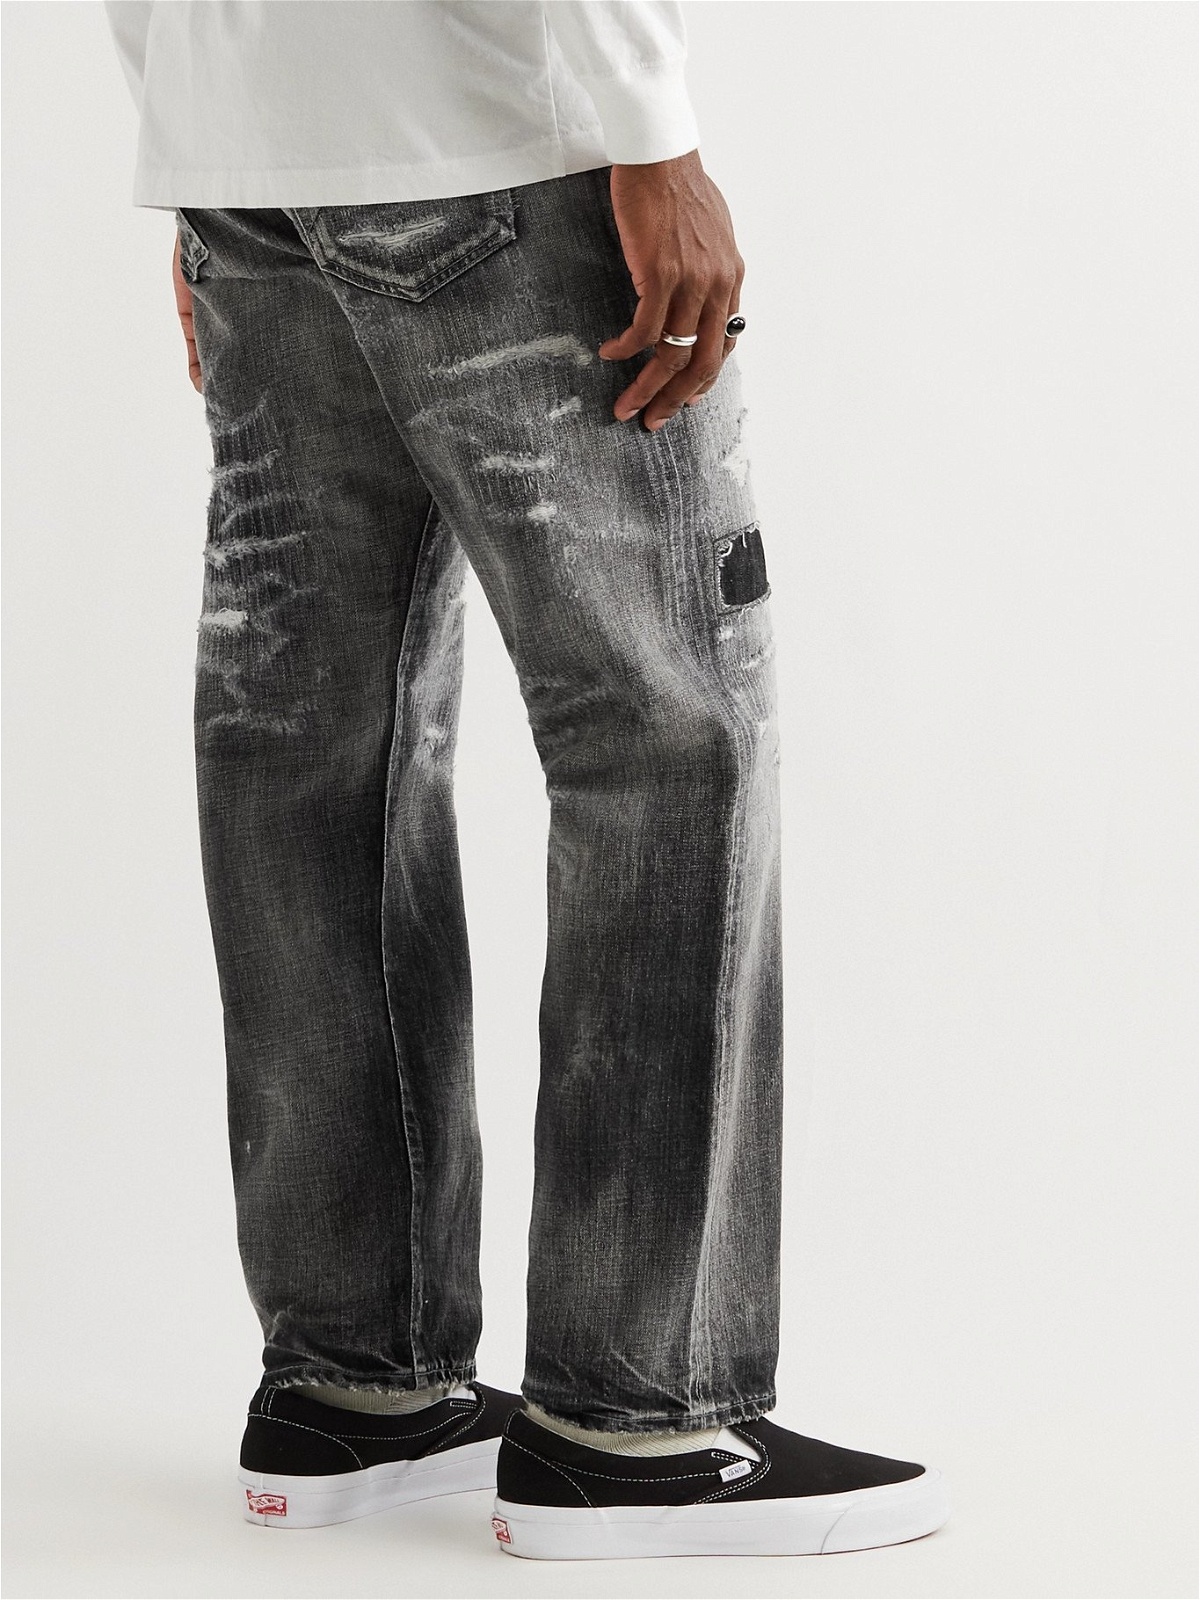 Buy GUOCAI Men Elastic Waist Solid Drawstring Scratch Cotton Denim Pants  Black US 2XL at Amazon.in